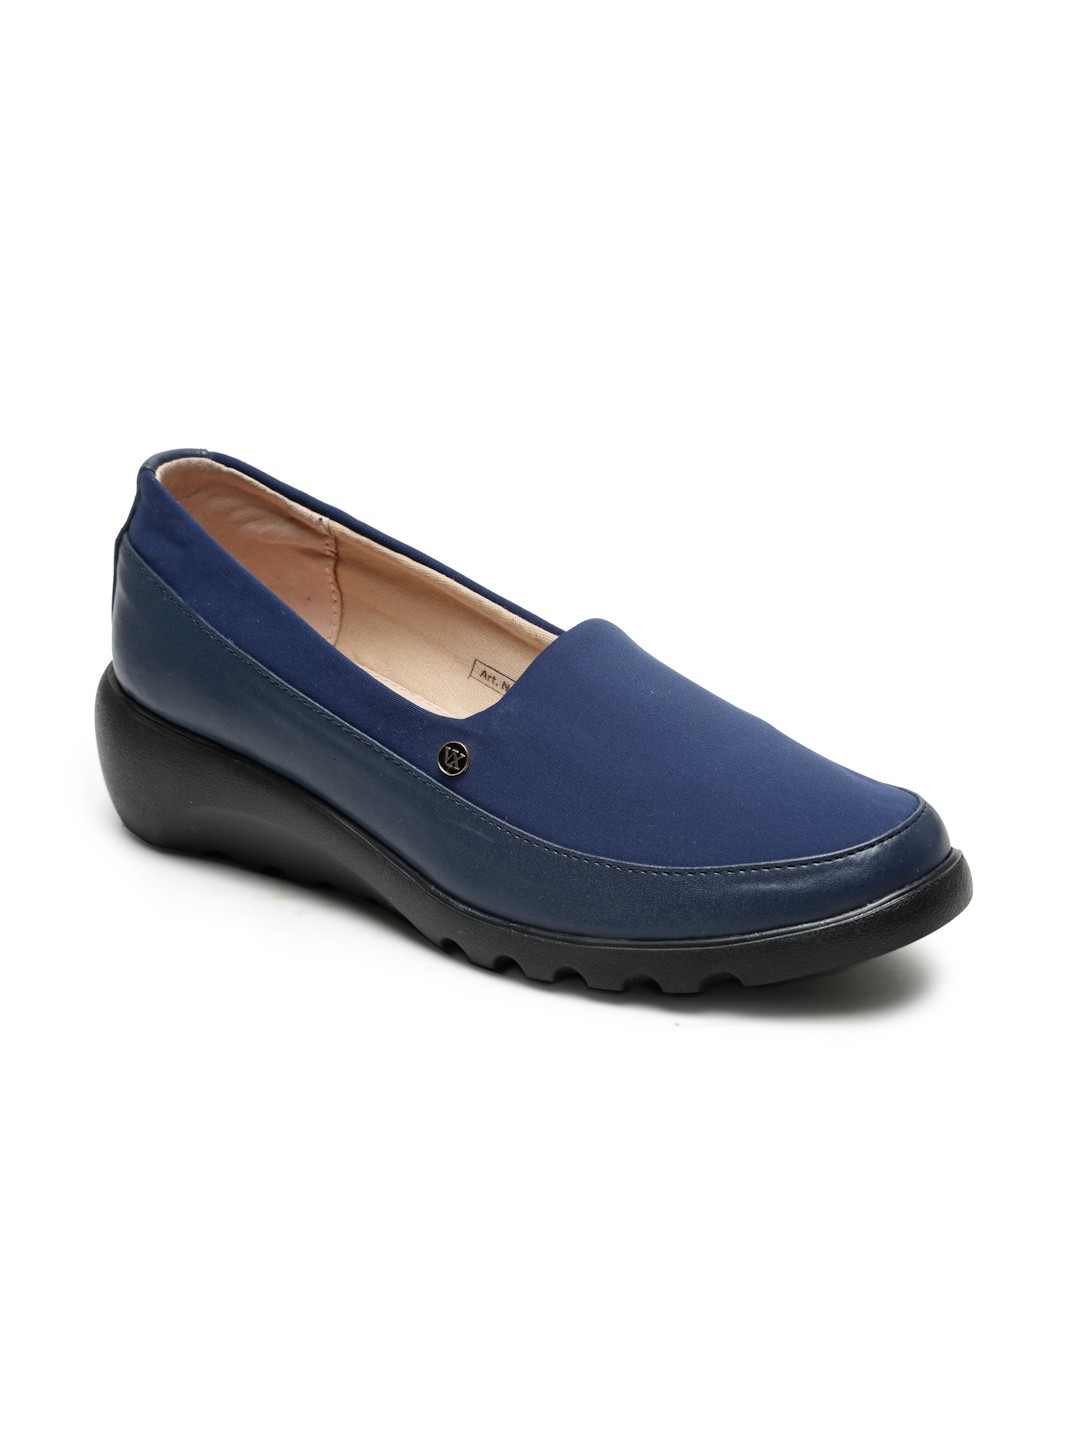 Buy Von Wellx Germany Comfort Women's Blue Casual Shoes Elsa Online in Kolkata